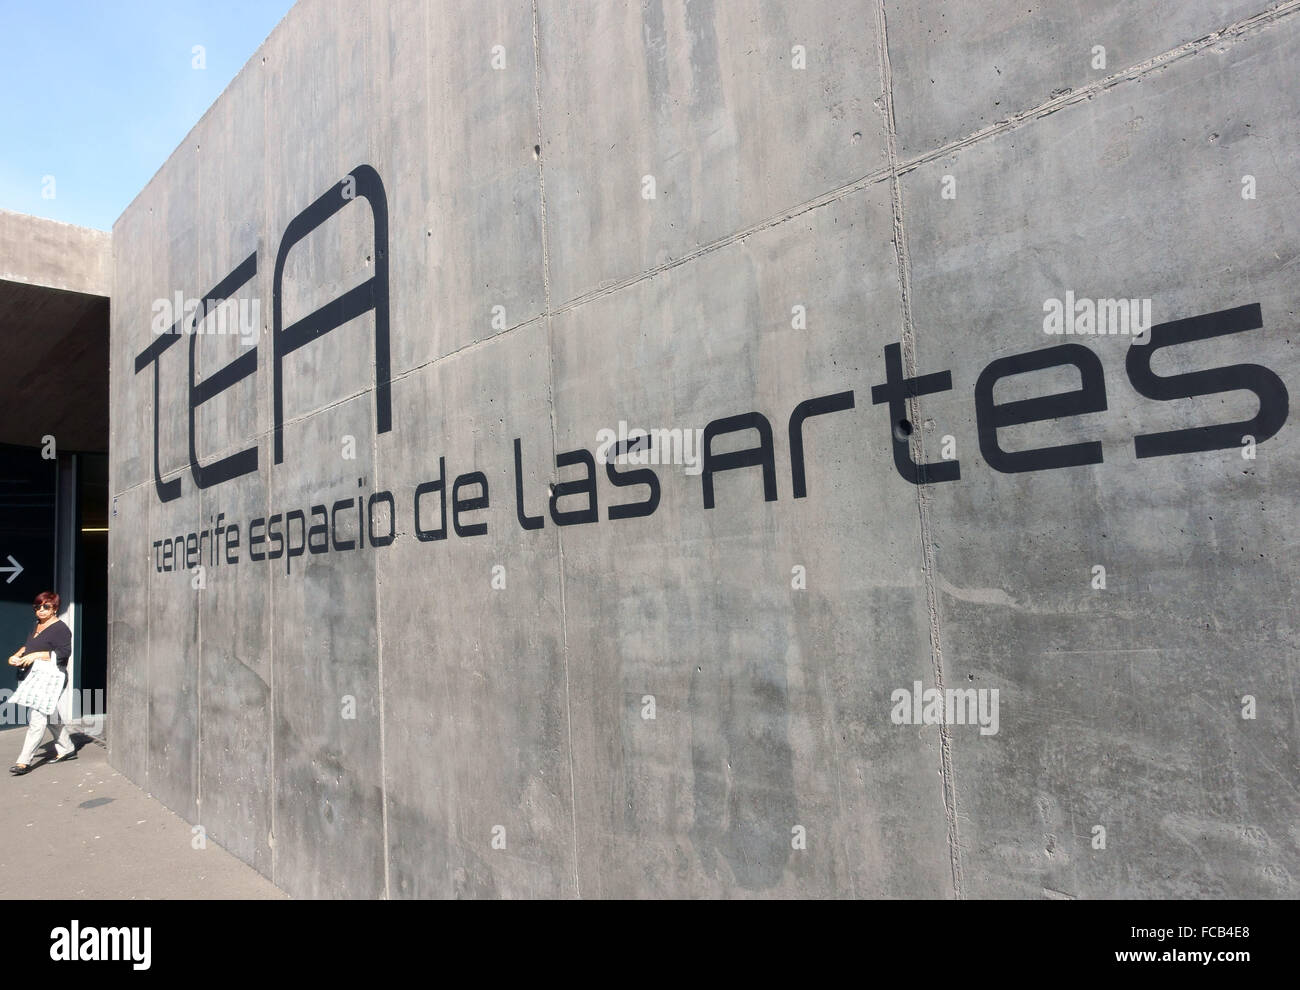 Tenerife Espacio de las Artes (TEA), Santa Cruz de Tenerife, Isole Canarie, Spagna dagli architetti Herzog e de Meuron Foto Stock